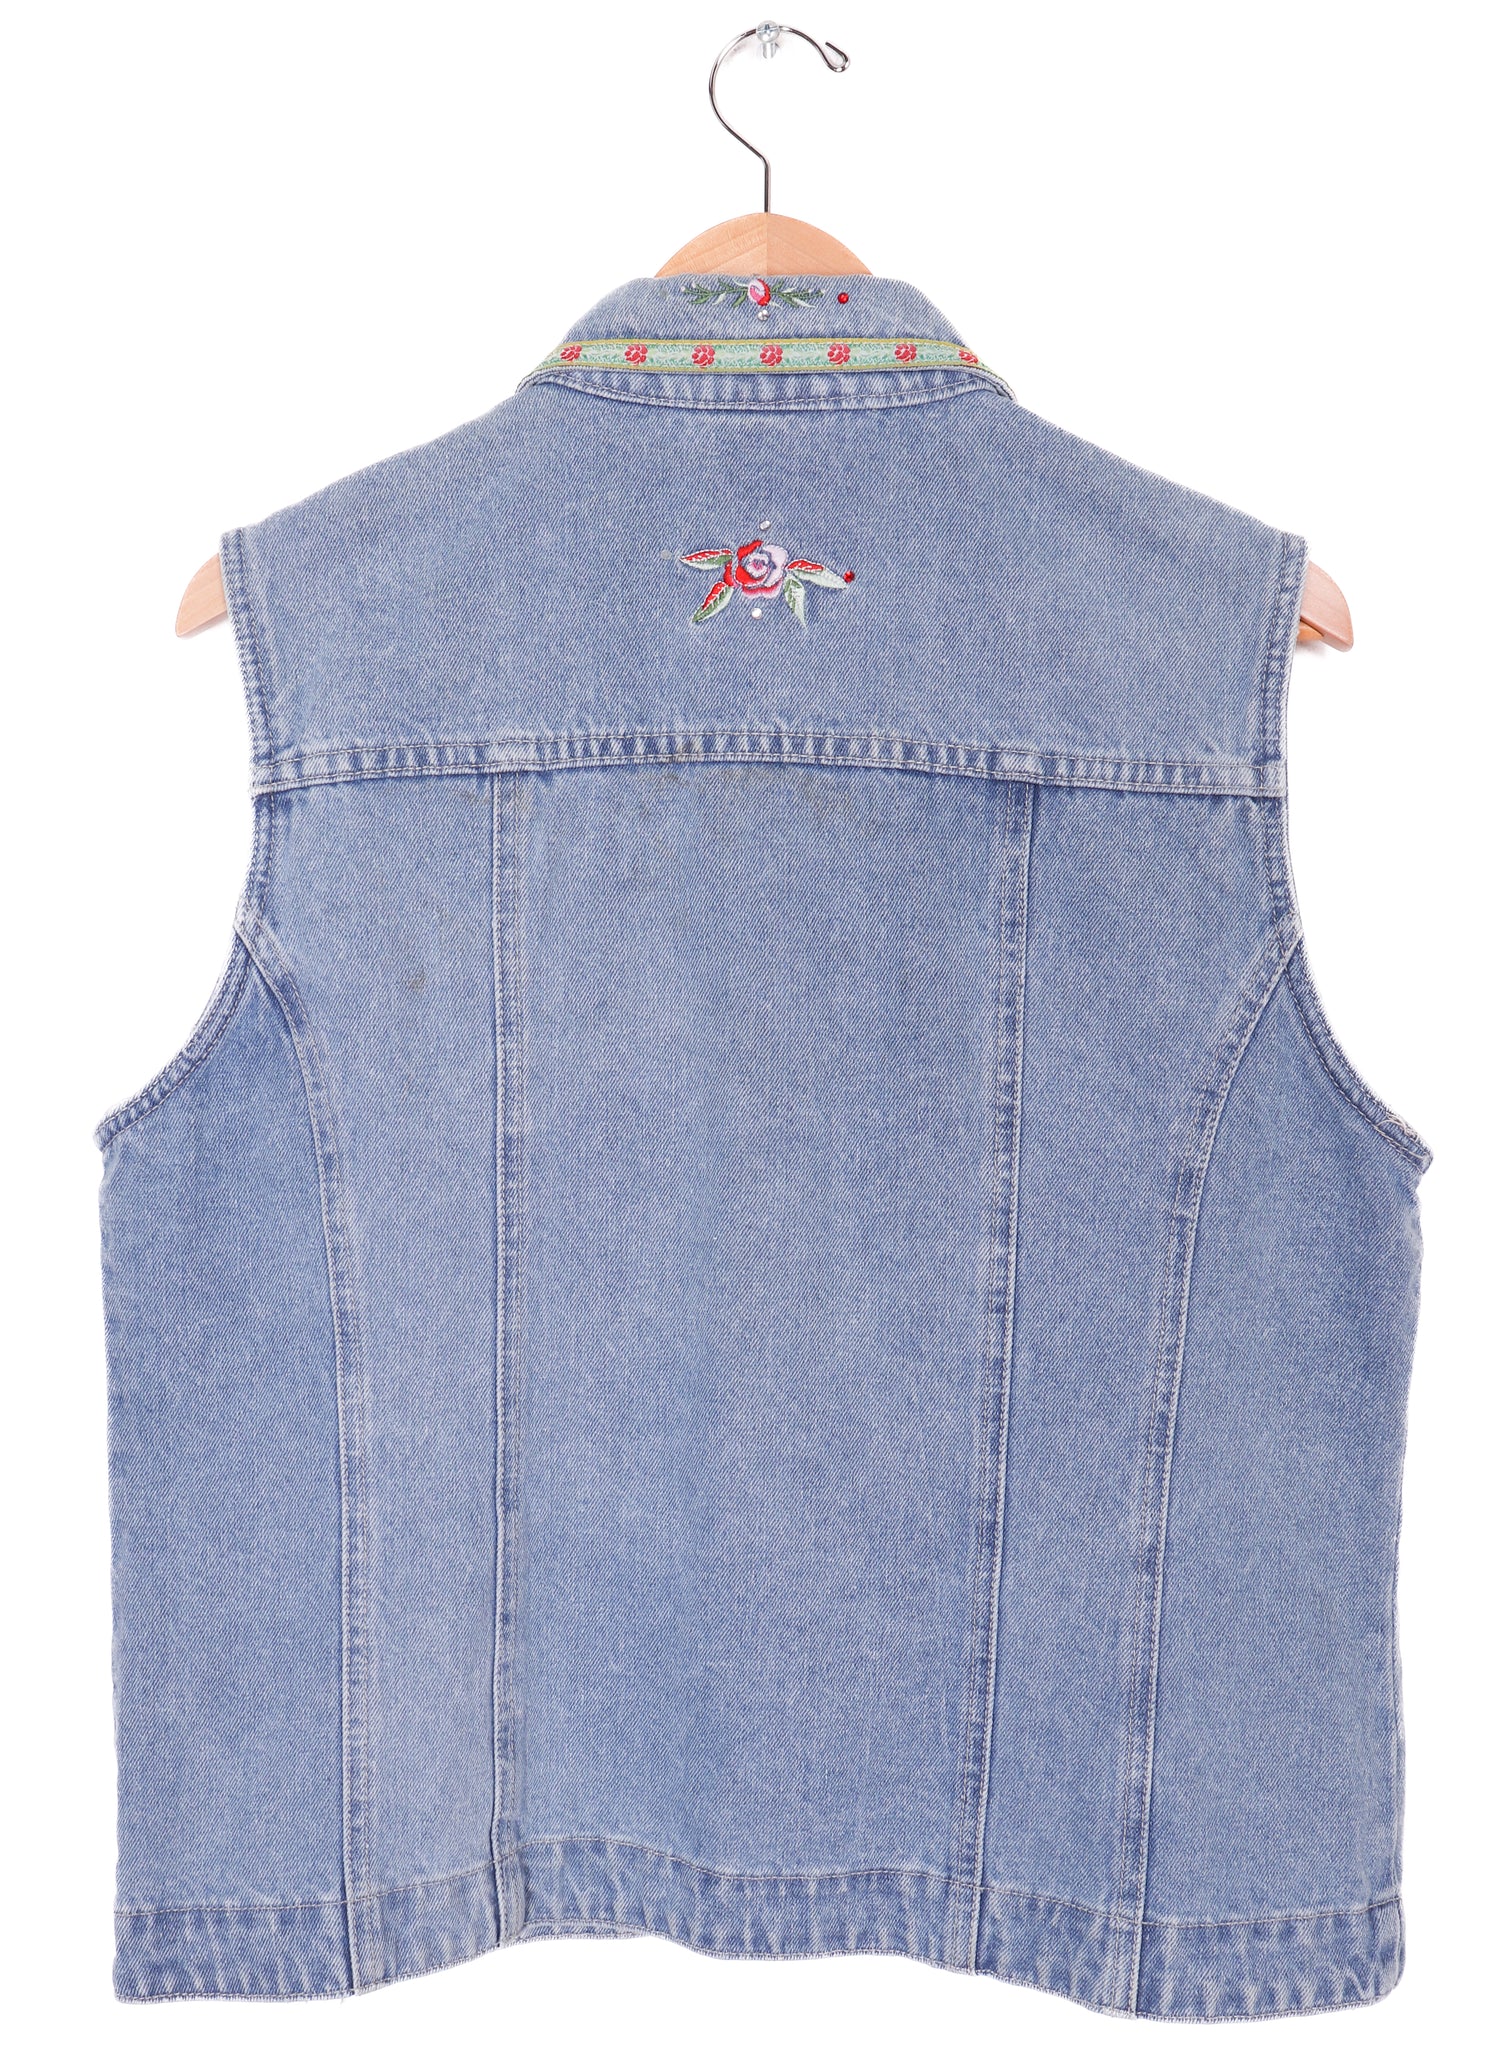 90s Bill Blass Jeans Floral Embroidered Denim Vest